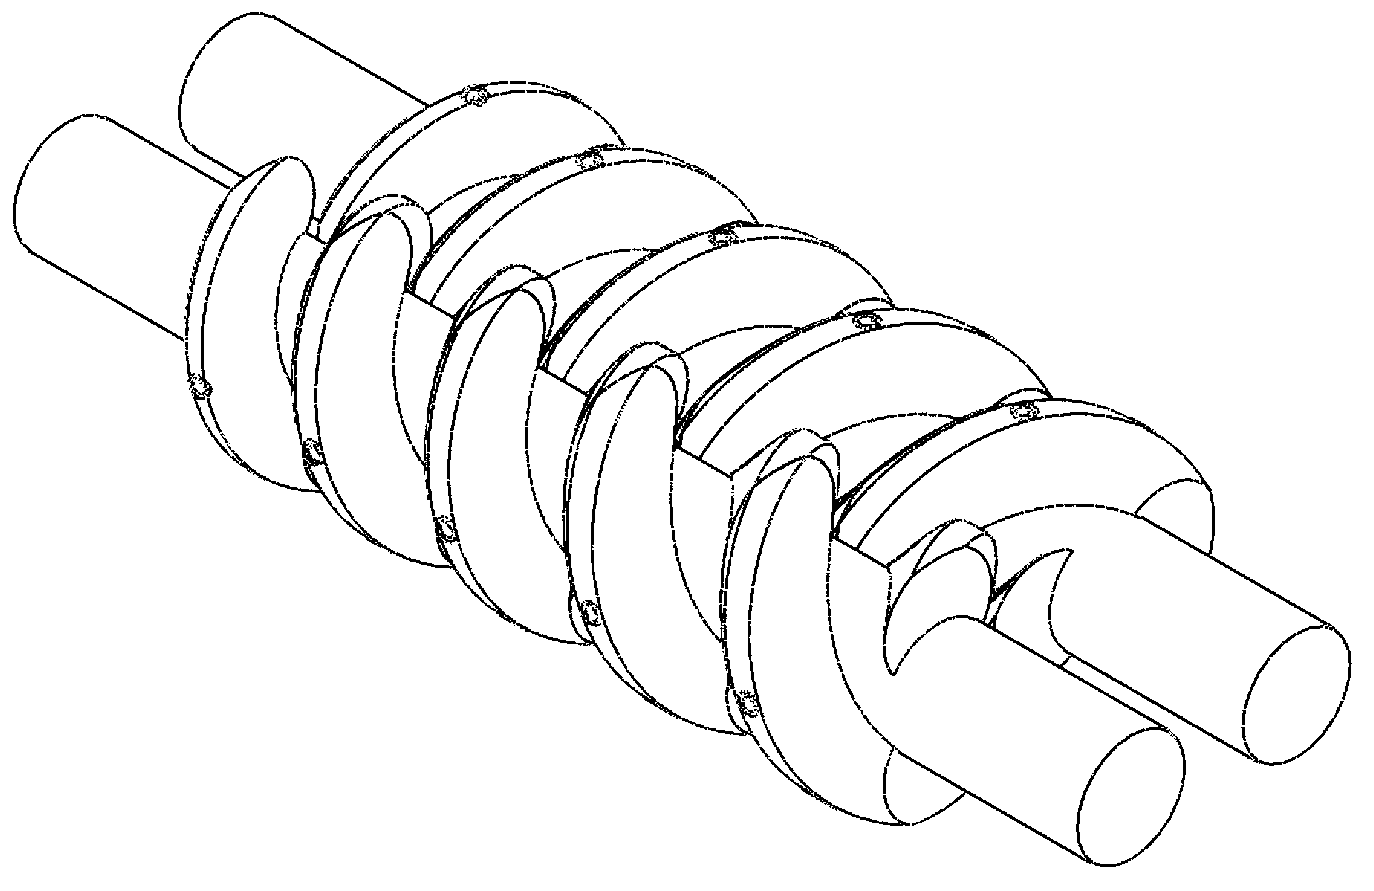 Screw rod type dry vacuum pump with combined screw rod rotor